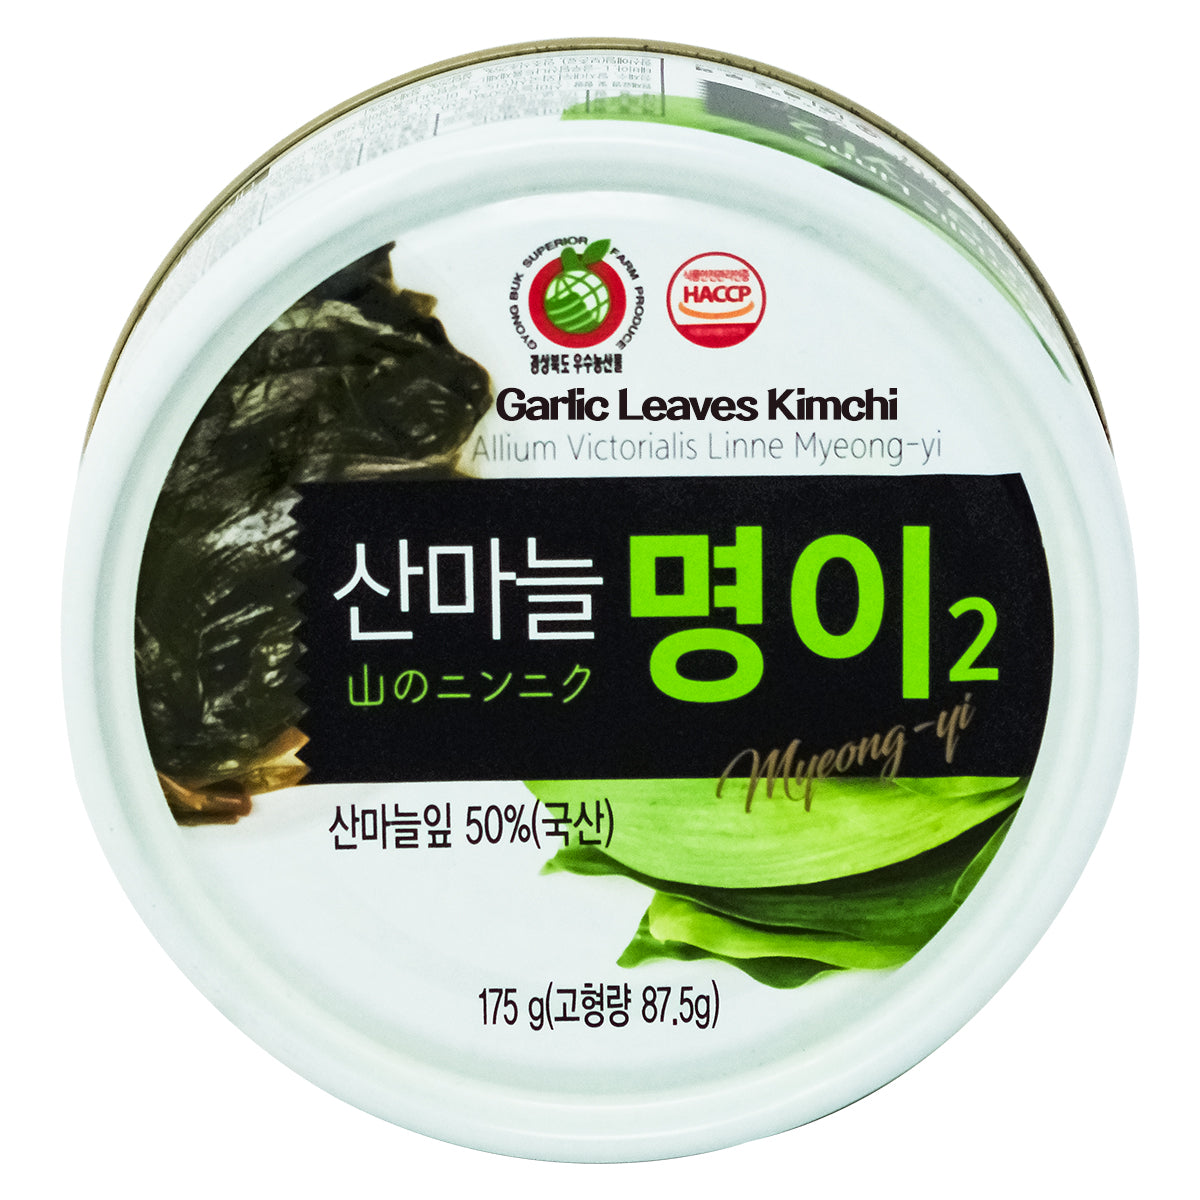 Korean Garlic Leaves Pickled Can 6.71oz (175g) per Pack, 3 Packs 독도 산마늘명이나물